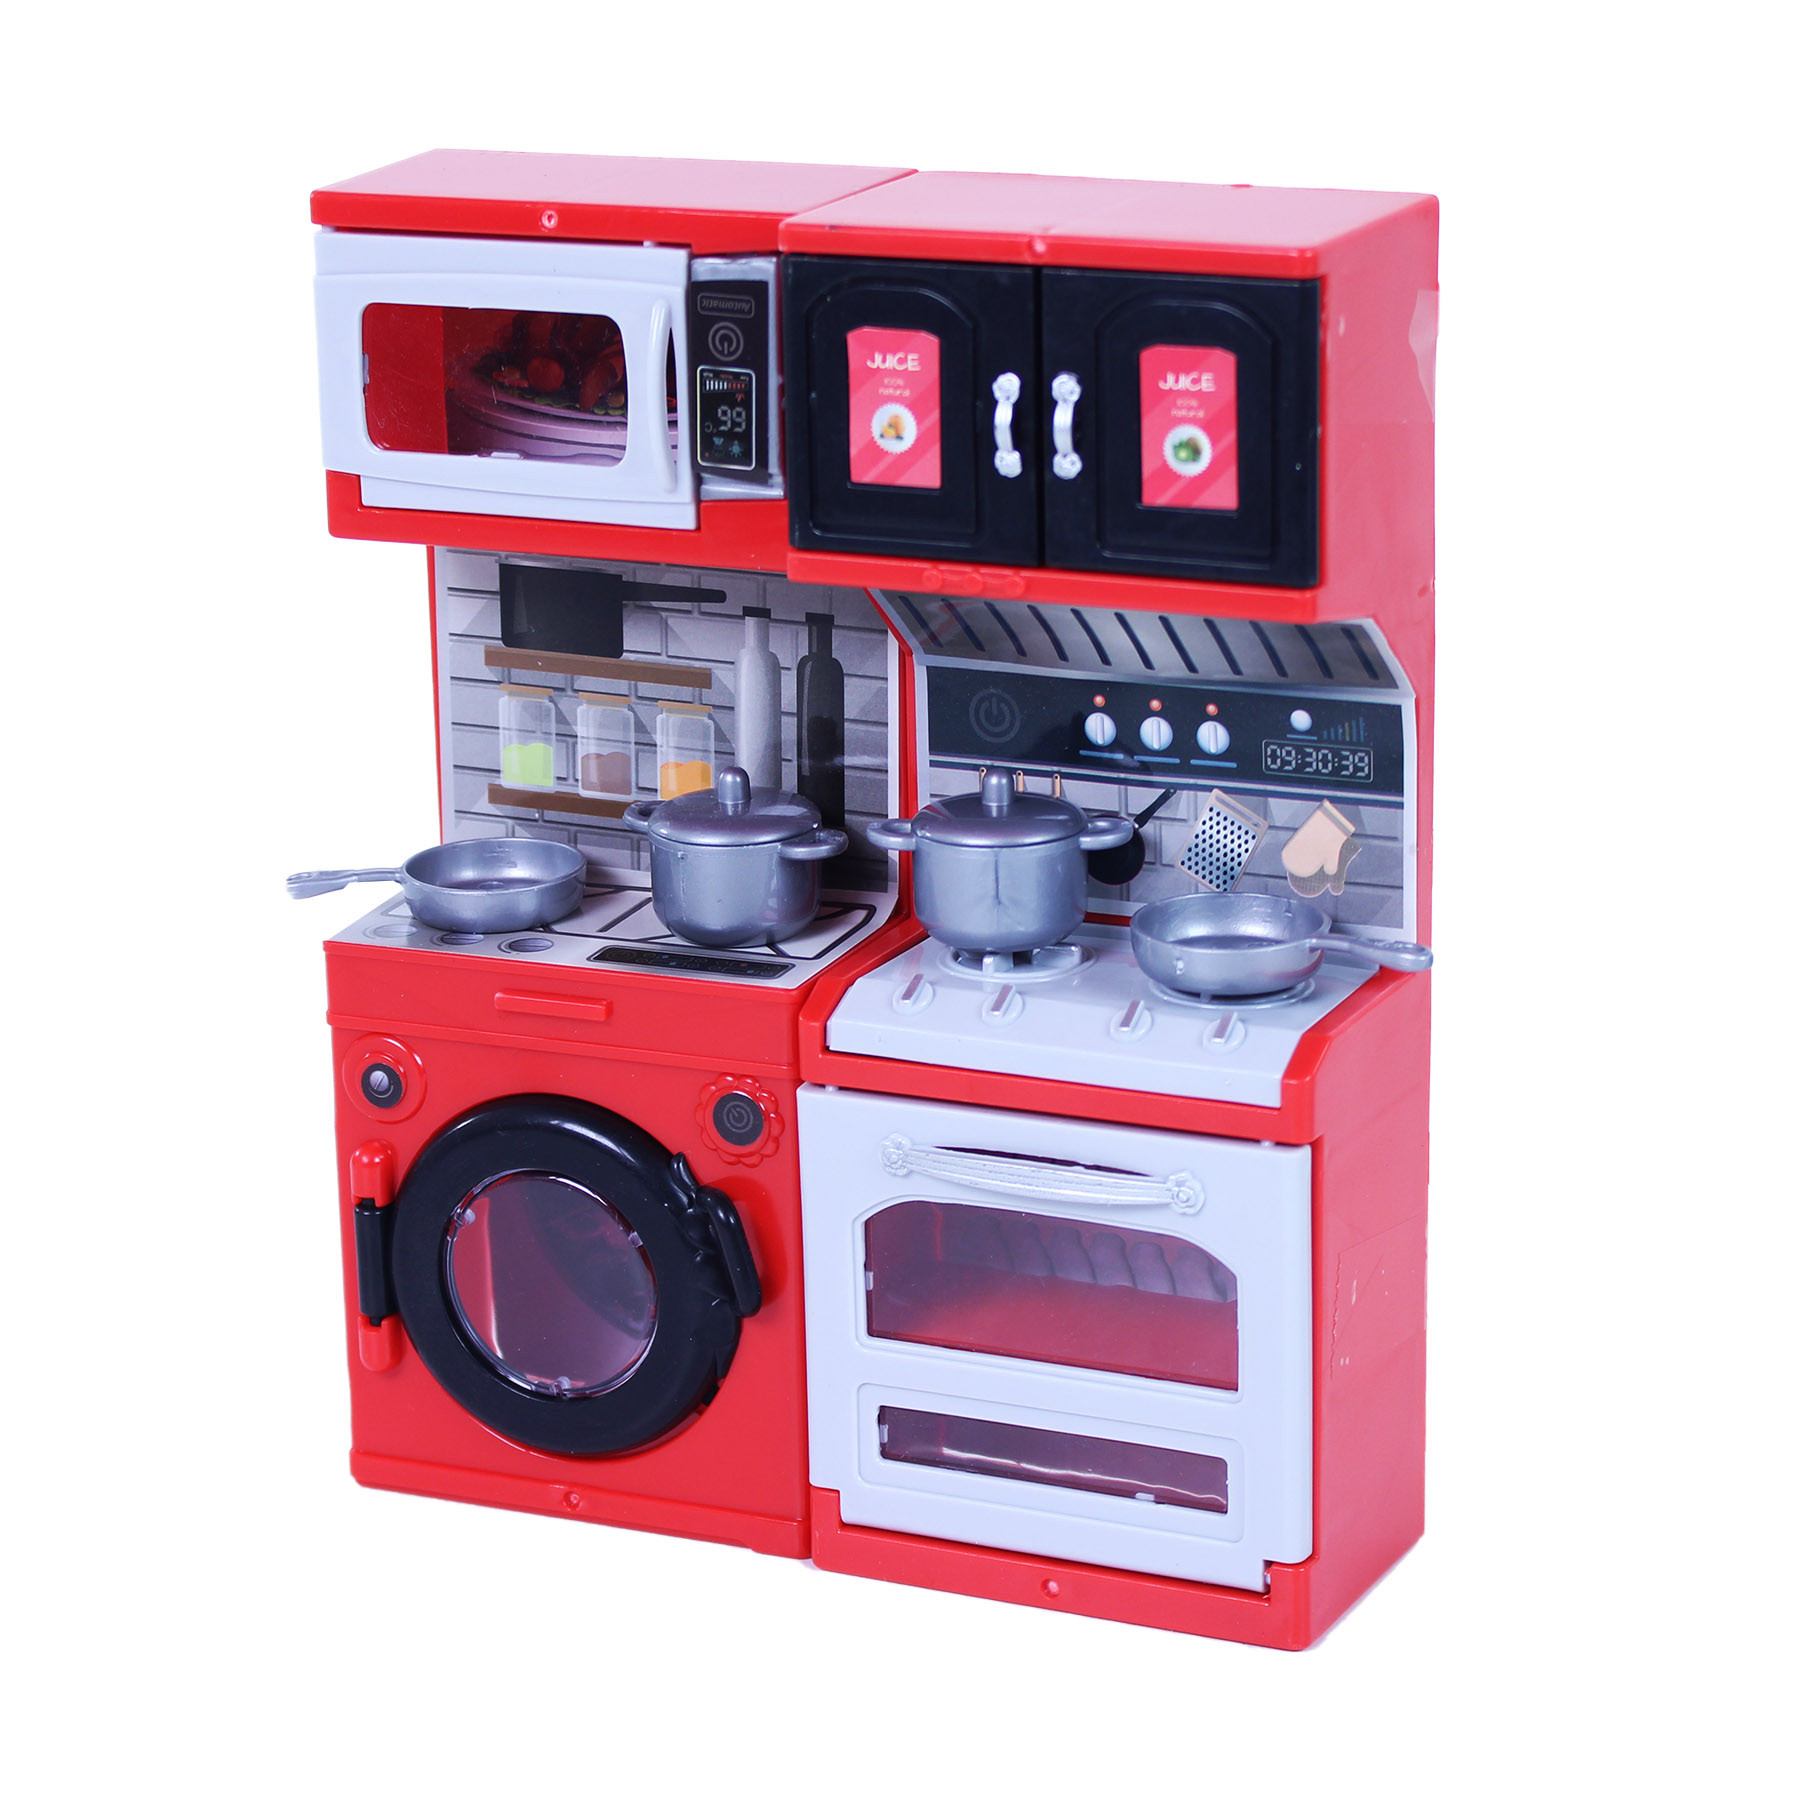 Mini kitchen set with washing machine